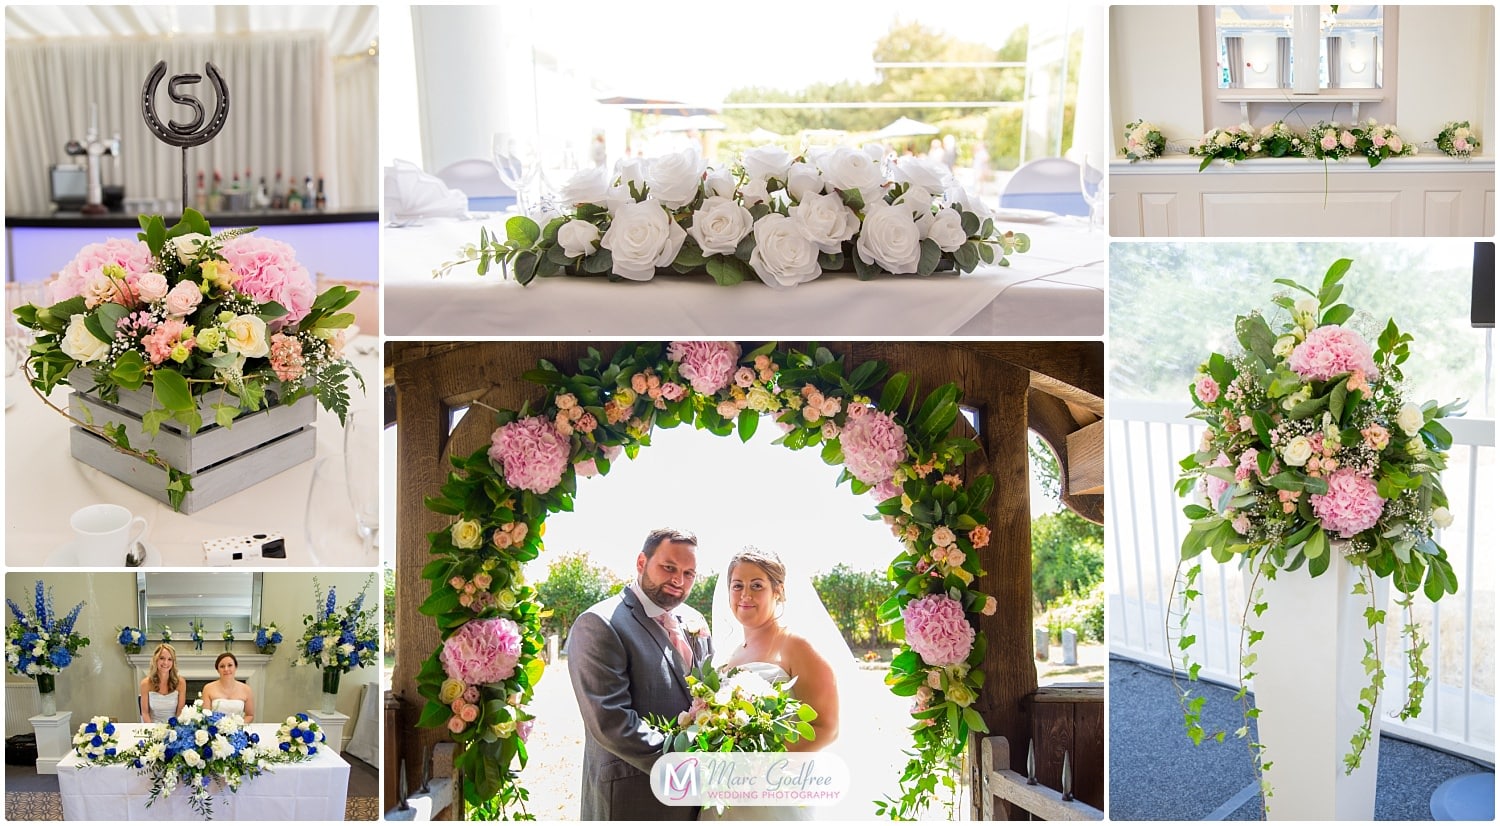 Floral displays-2019 summer wedding trends